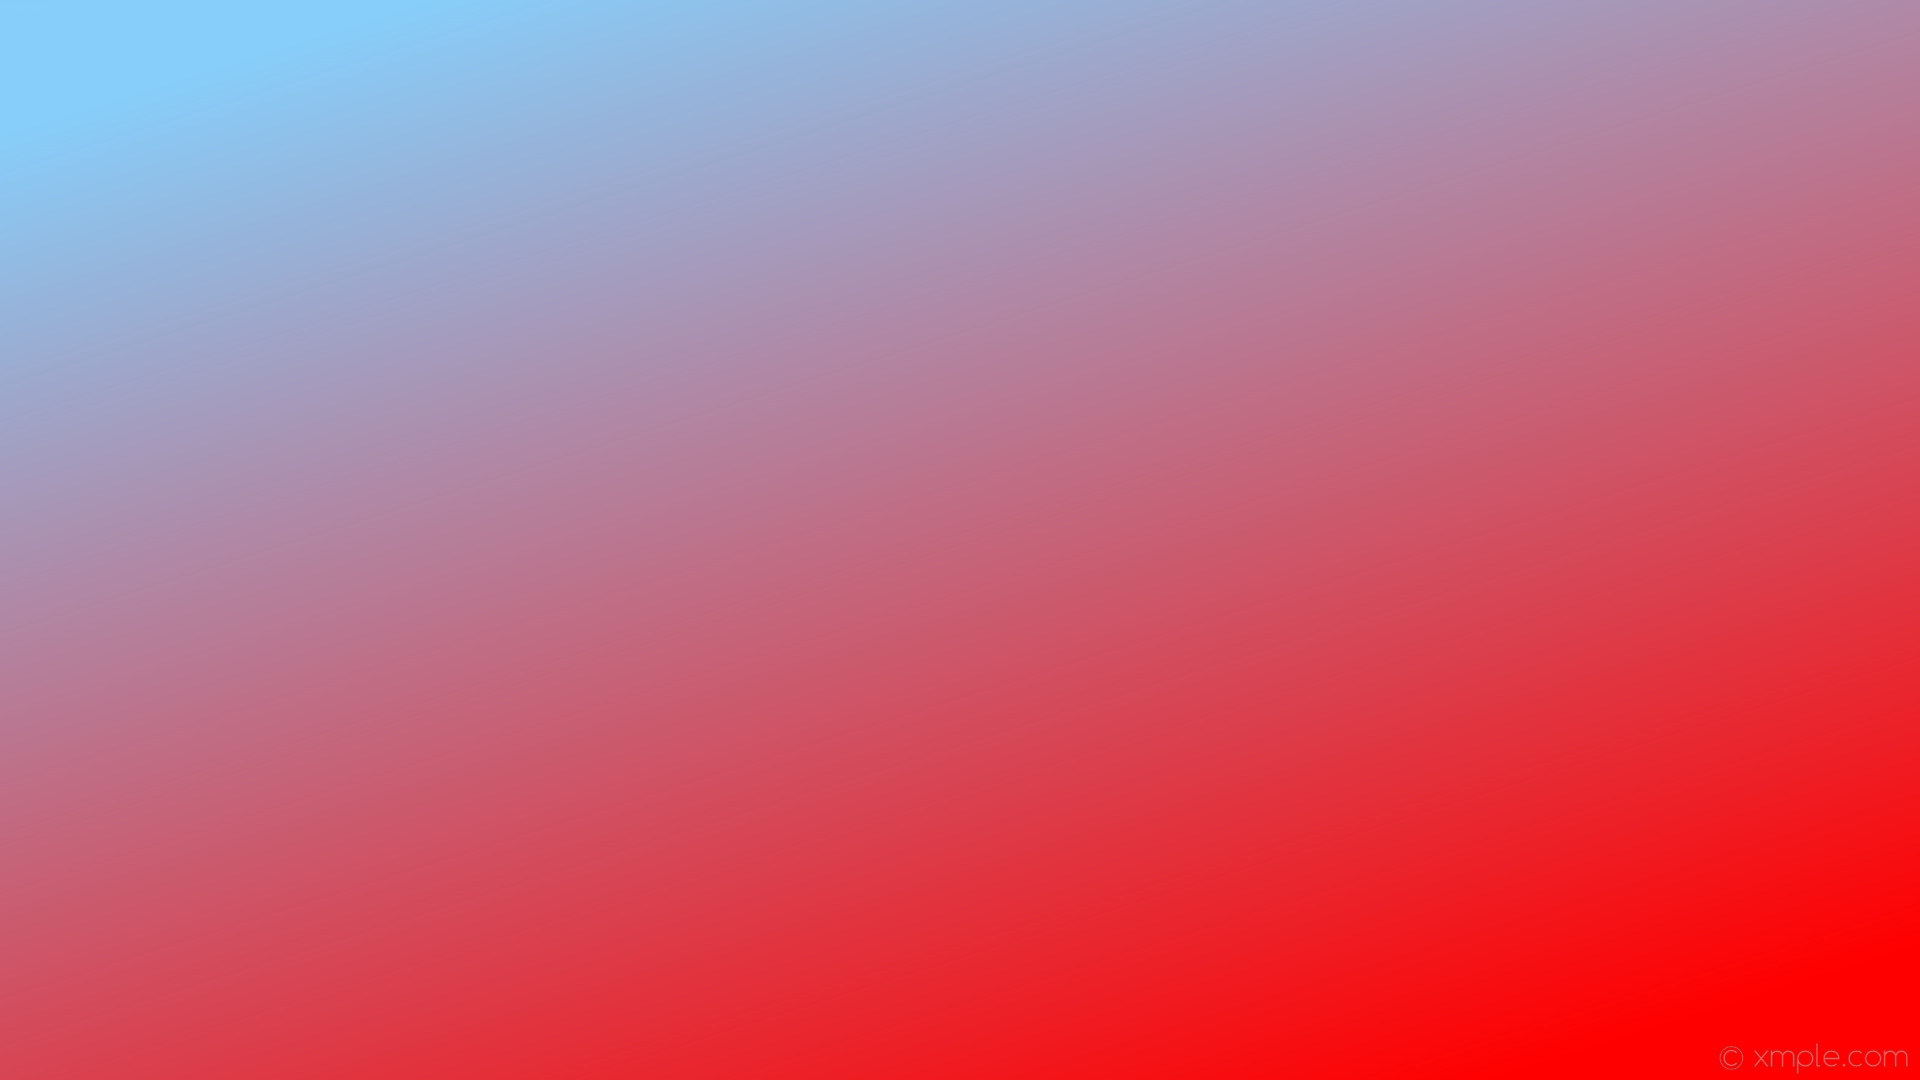 wallpaper gradient linear red blue light sky blue #ff0000 #87cefa 315Â°